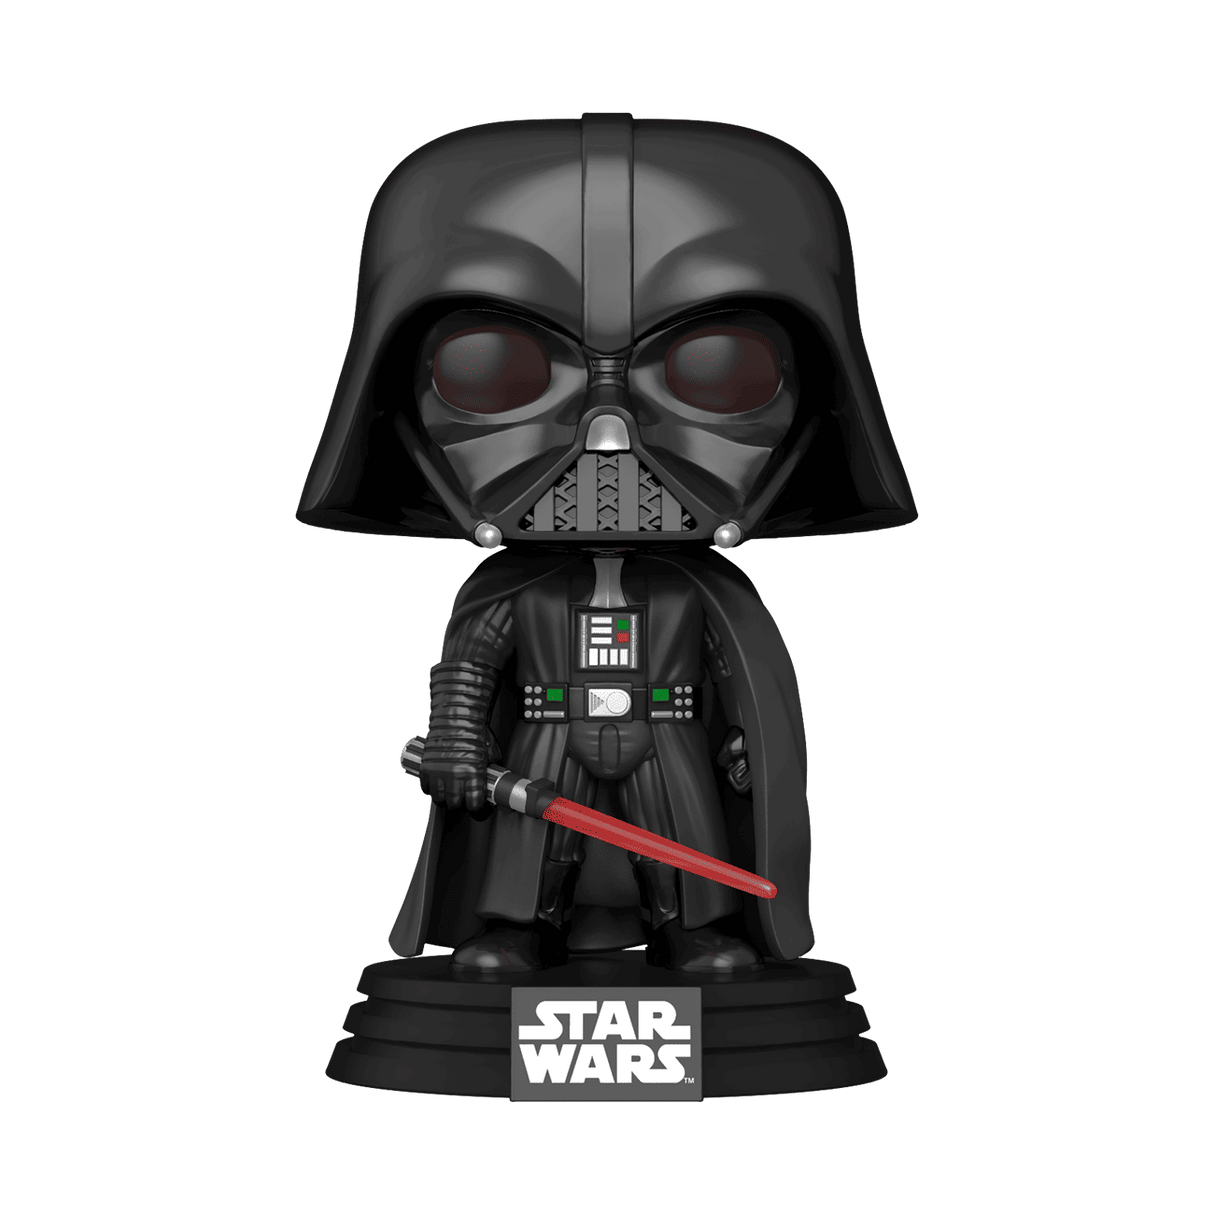 Funko POP! - Star Wars: Darth Vader #597